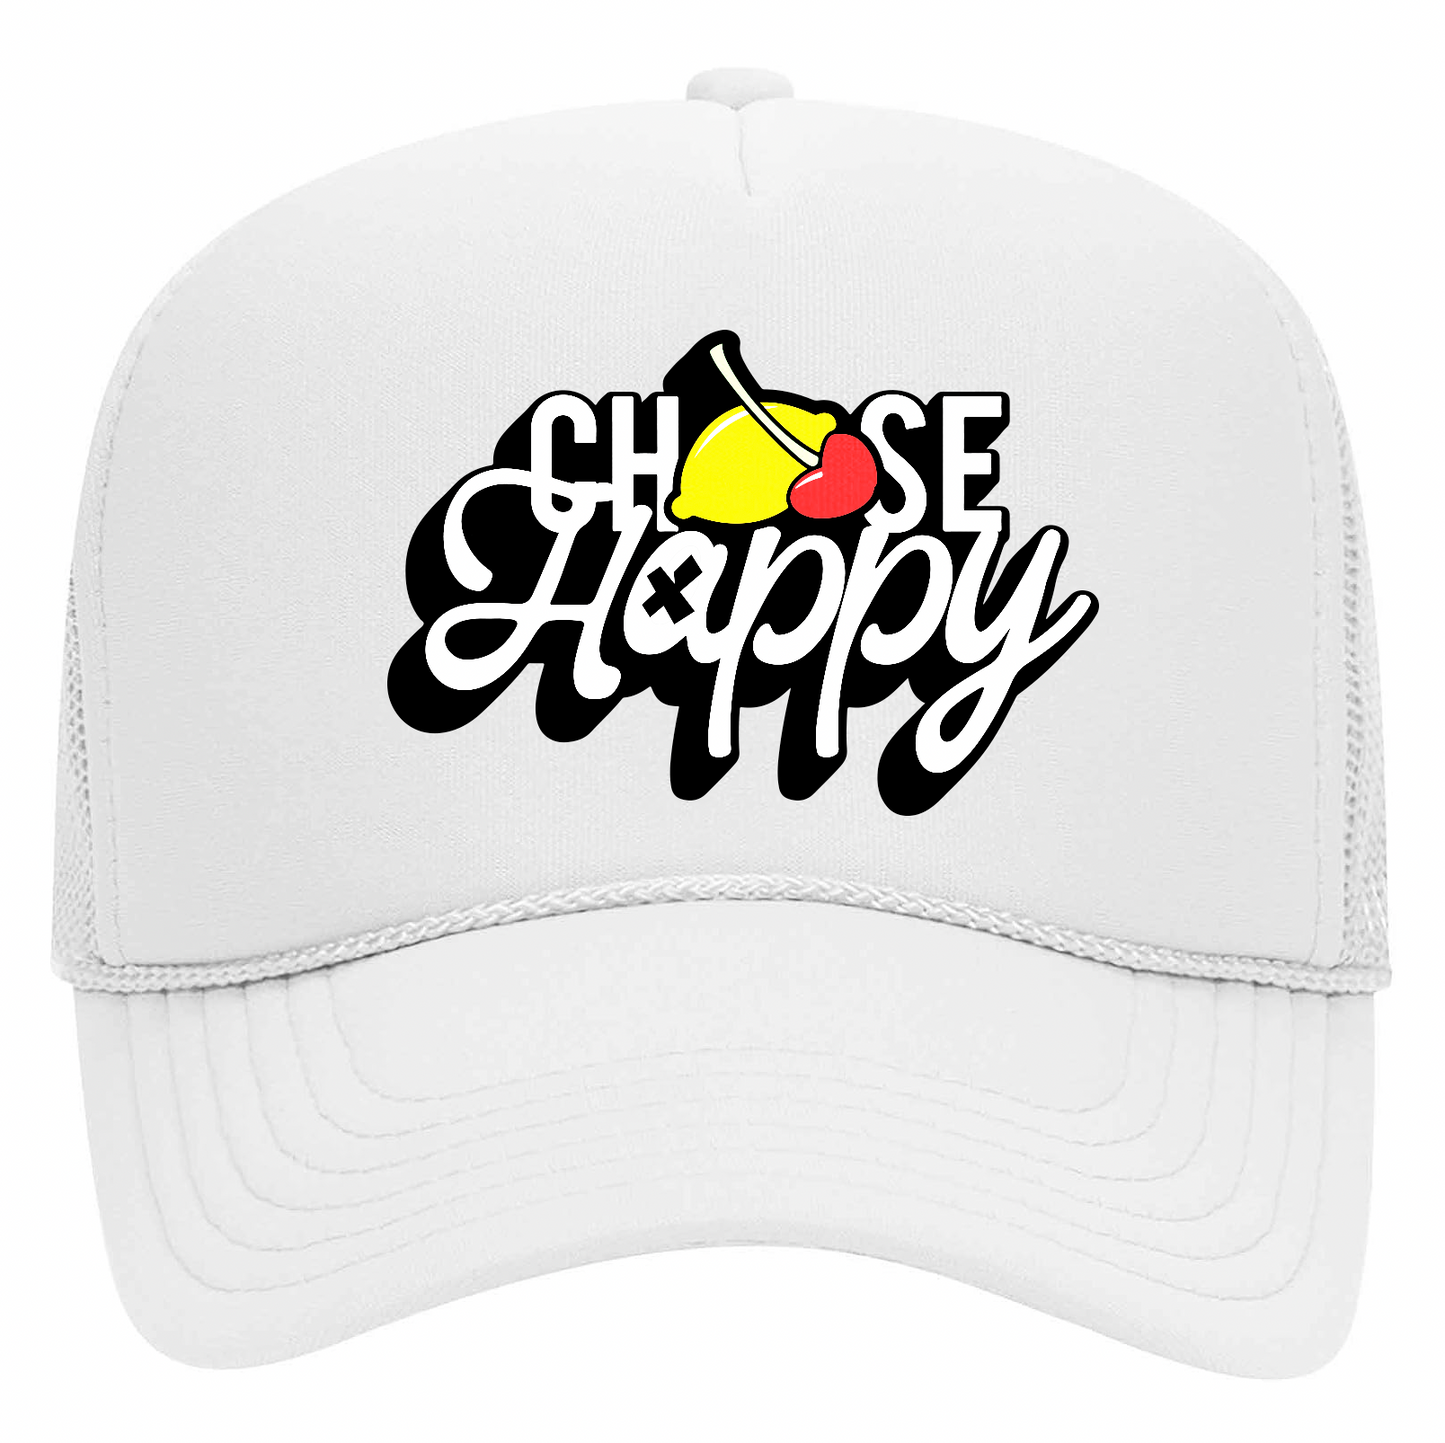 "Choose Happy" White Trucker Hat